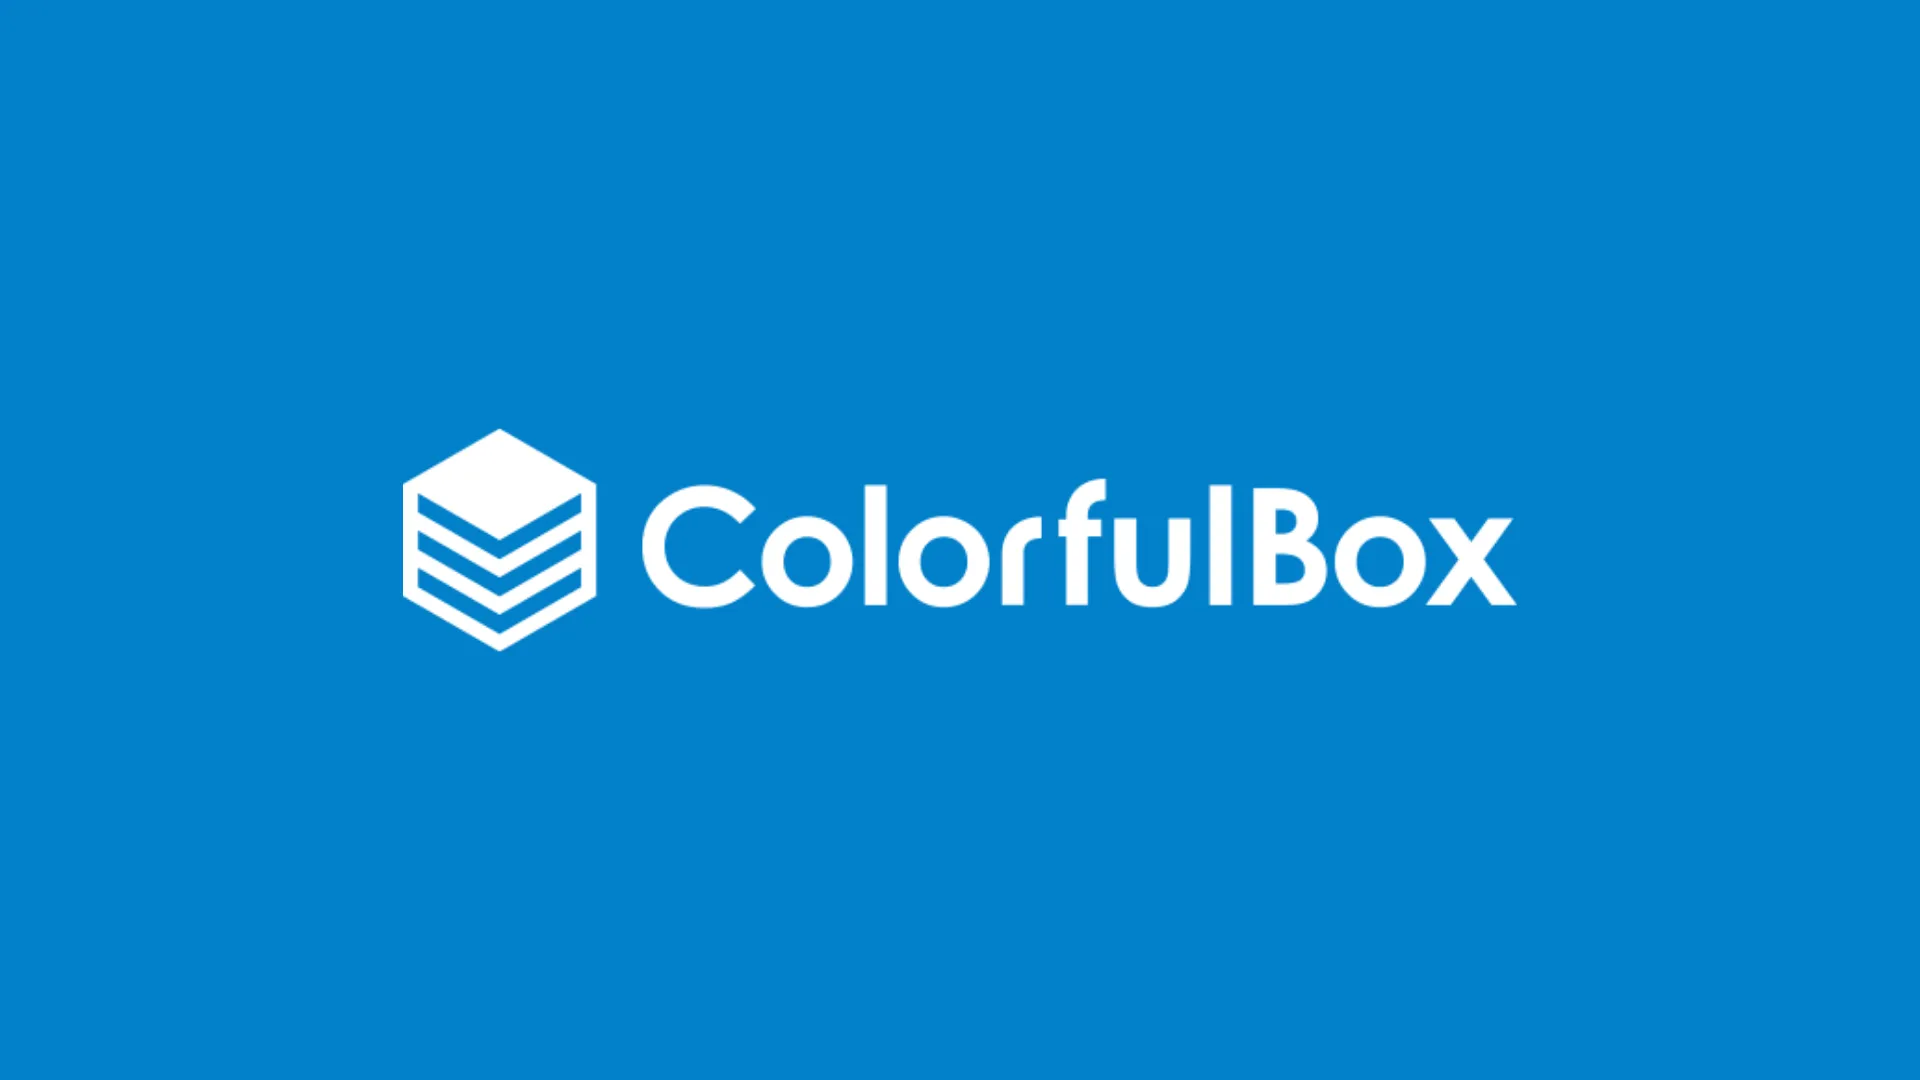 ColorfulBoxを契約した